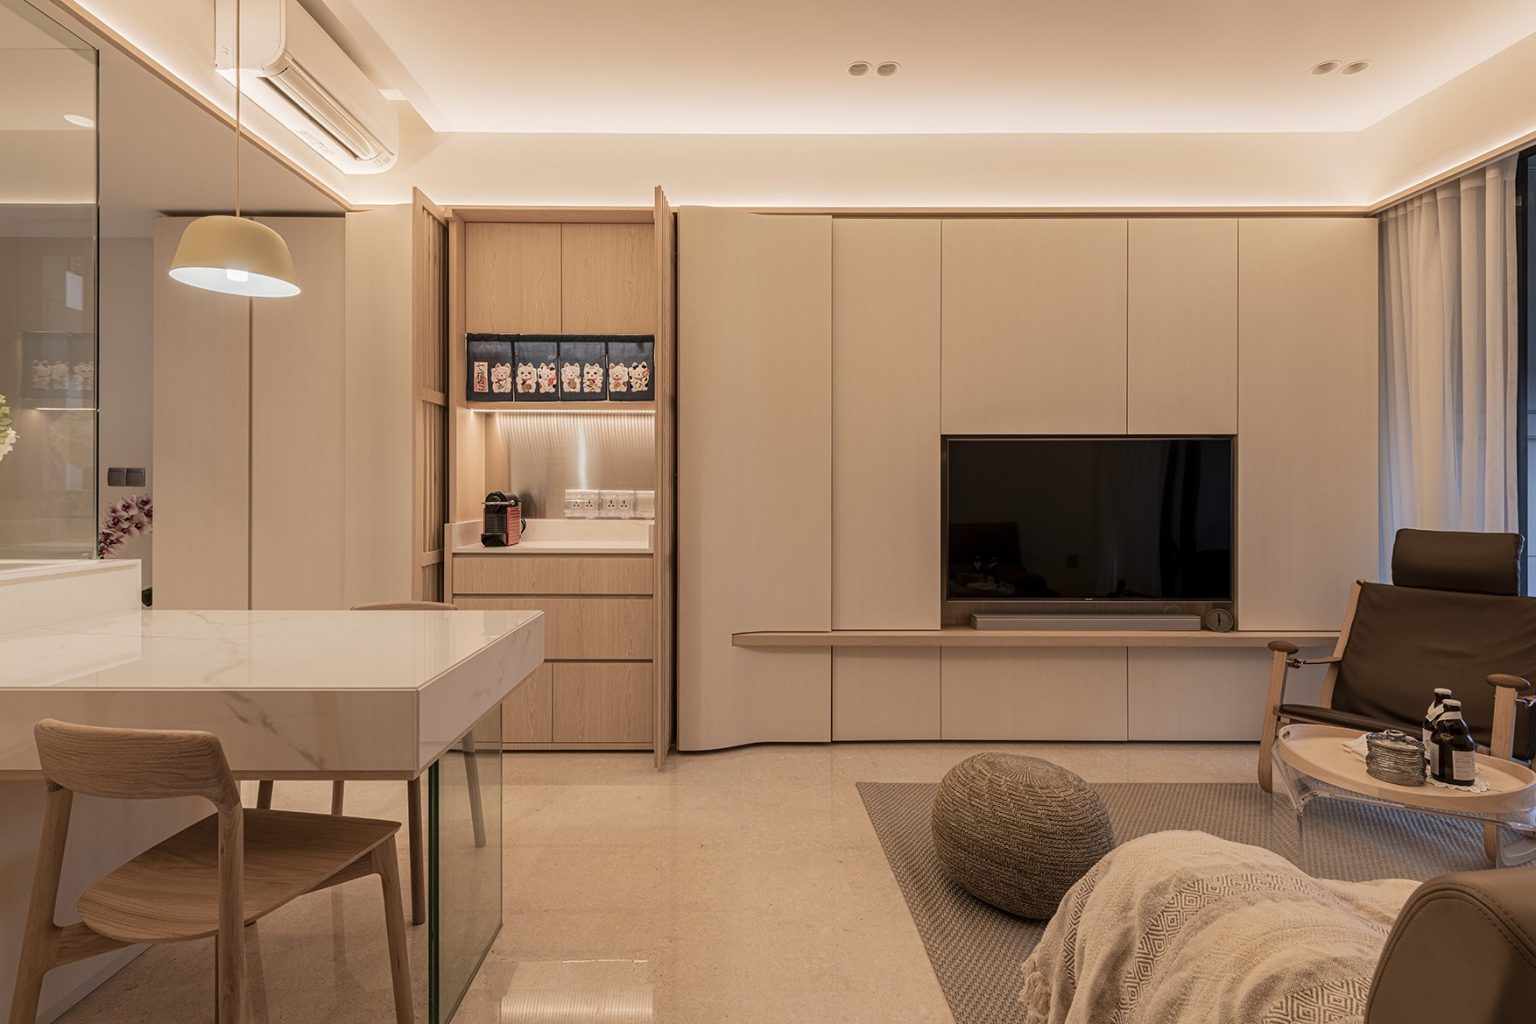 Condo Design Ideas Living Room Dark Small